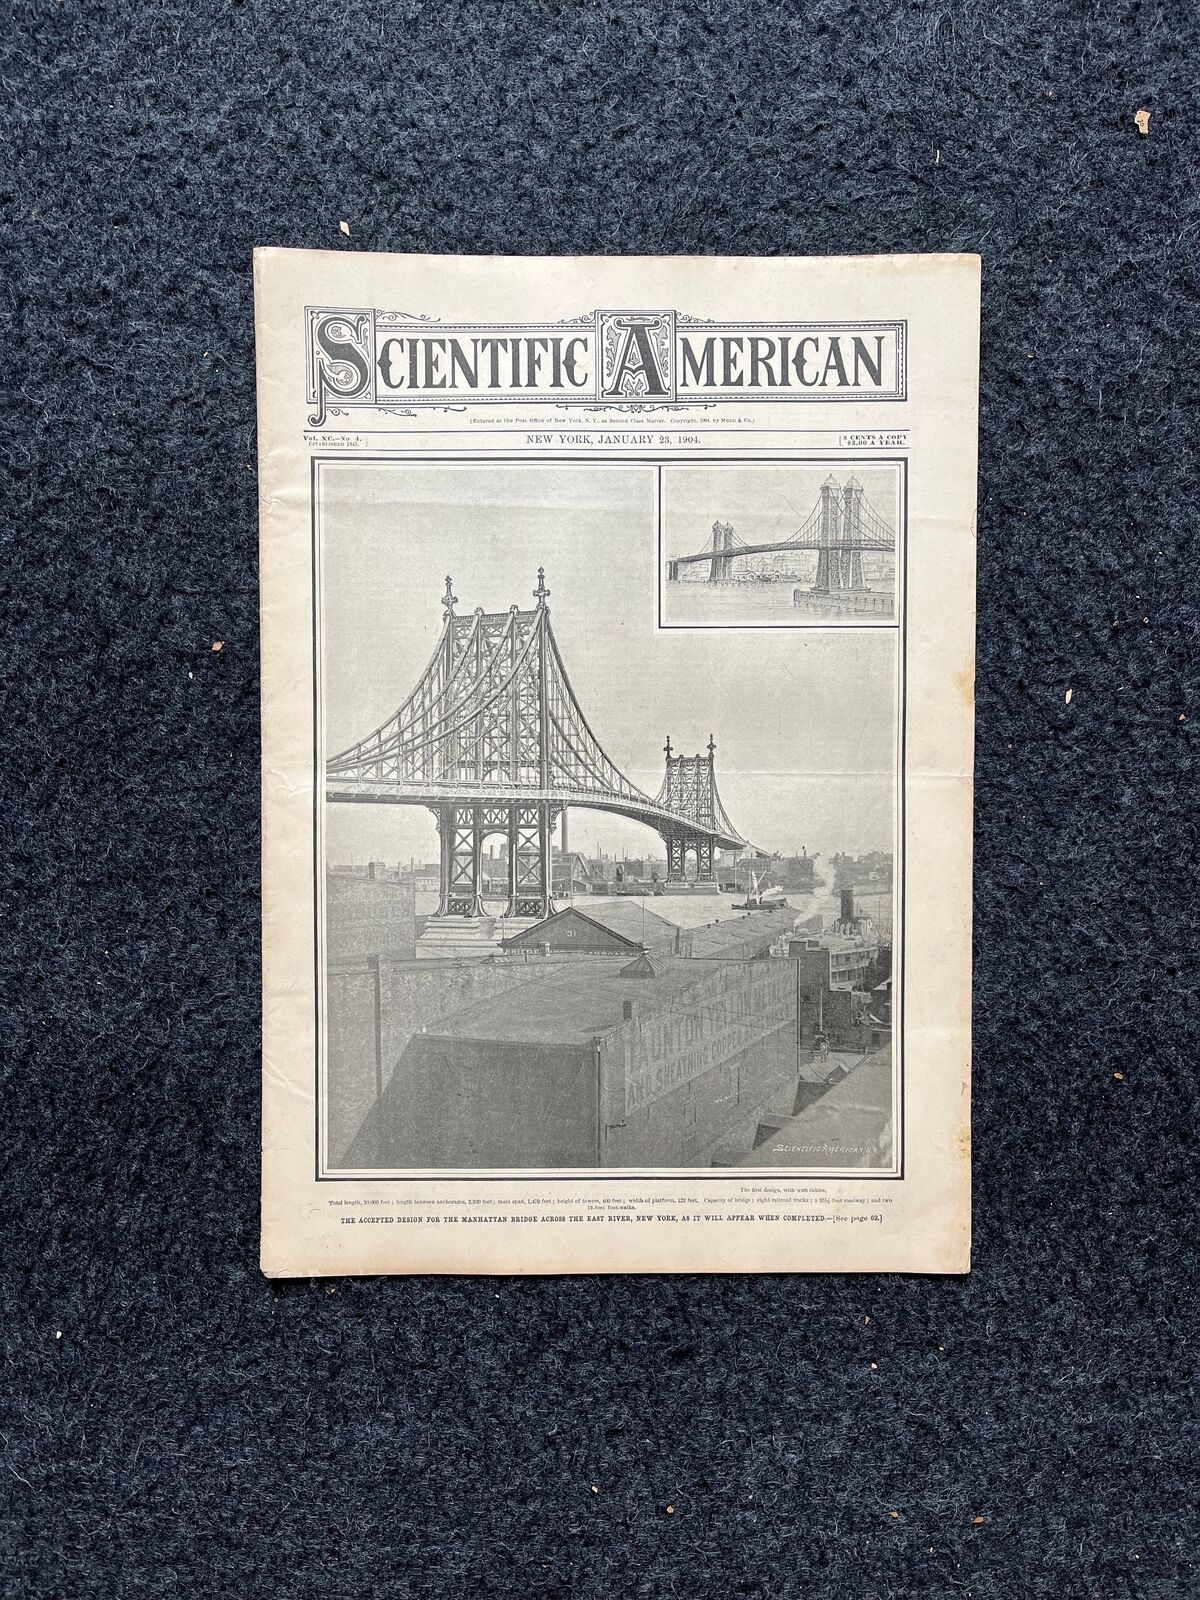 1904 Manhatten Bridge Construction New York City, NYC Memorabilia, NYC Gifts, S